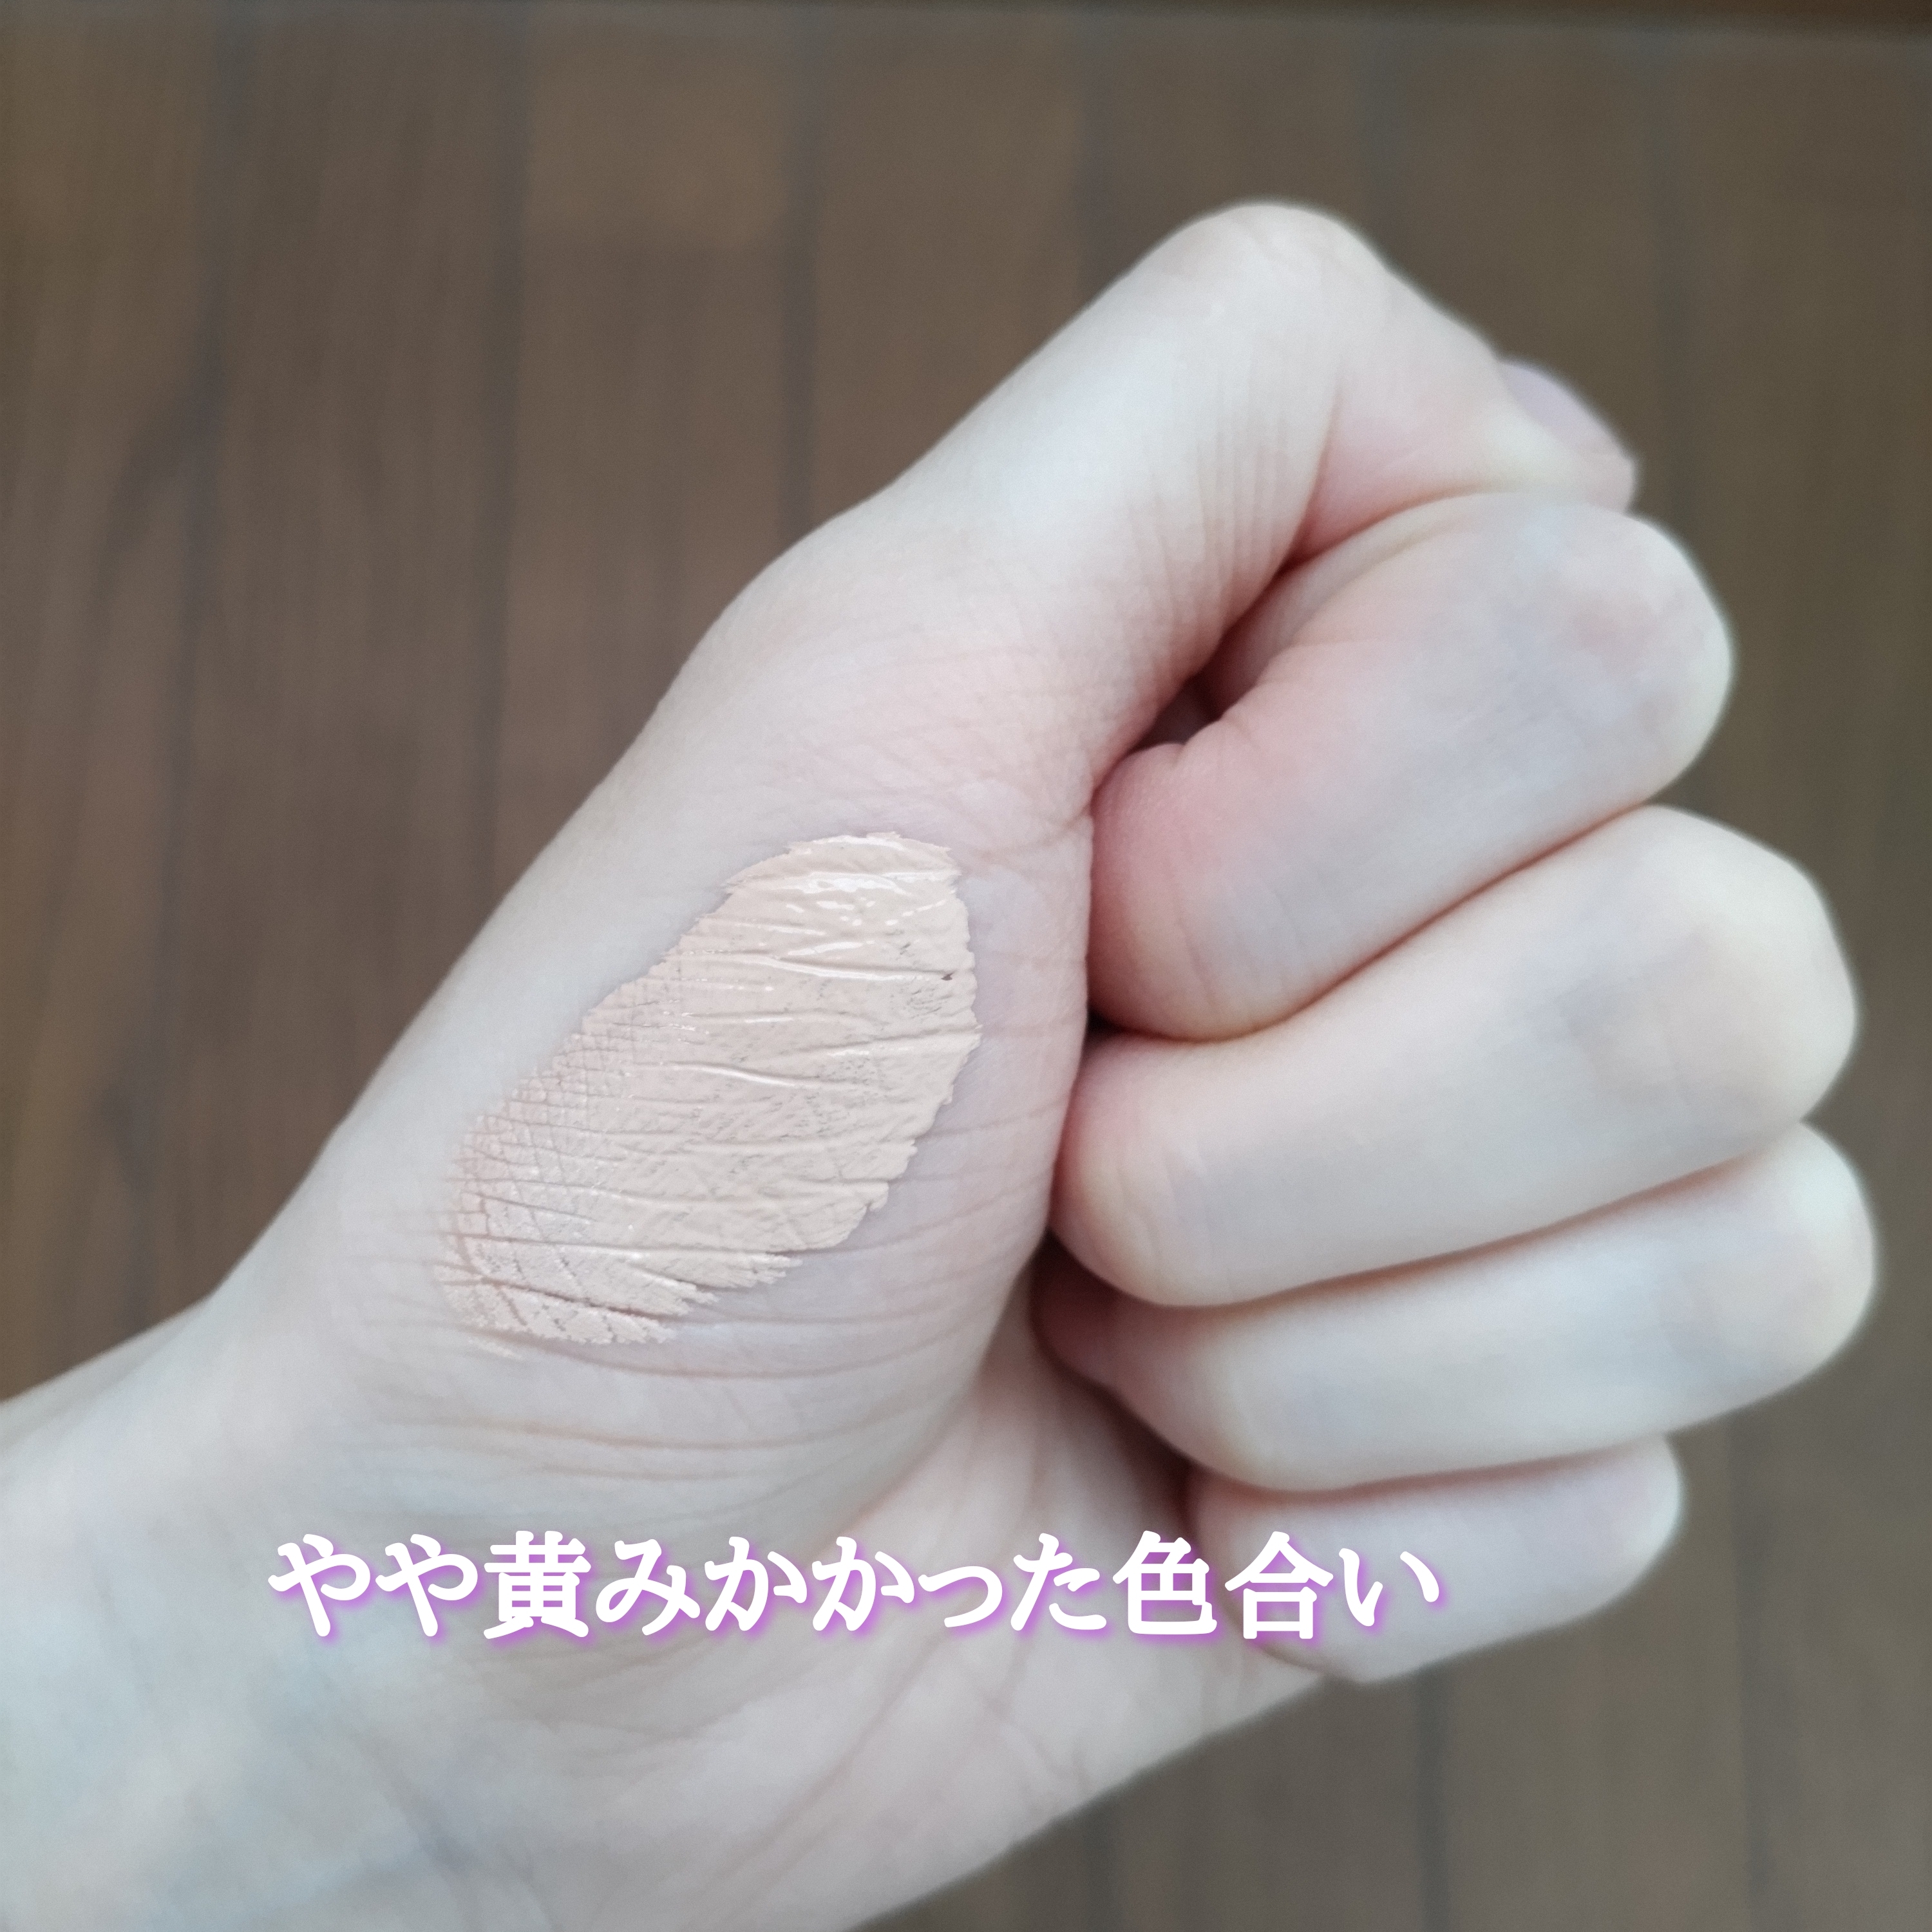 APLIN ピンクティーツリーカバーアップグロウクッションを使ったYuKaRi♡さんのクチコミ画像4